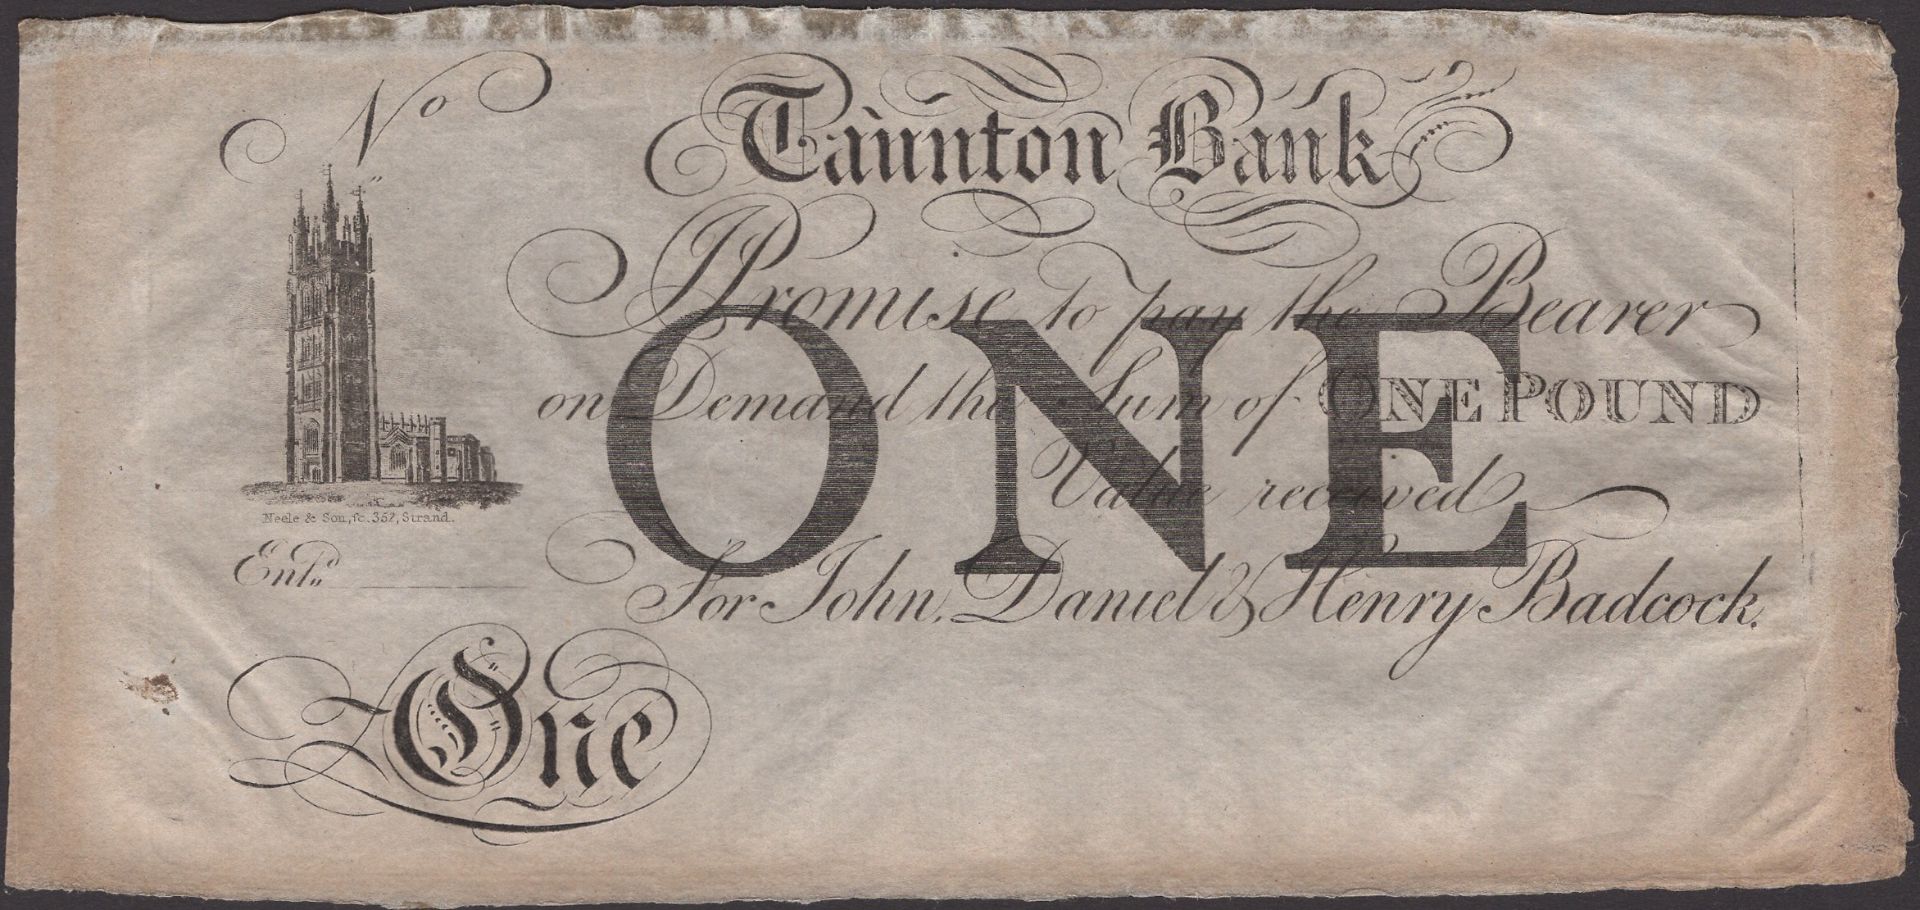 Taunton Bank, for John, Daniel & Henry Badcock, unissued Â£1, 18-, no serial number, mounting...